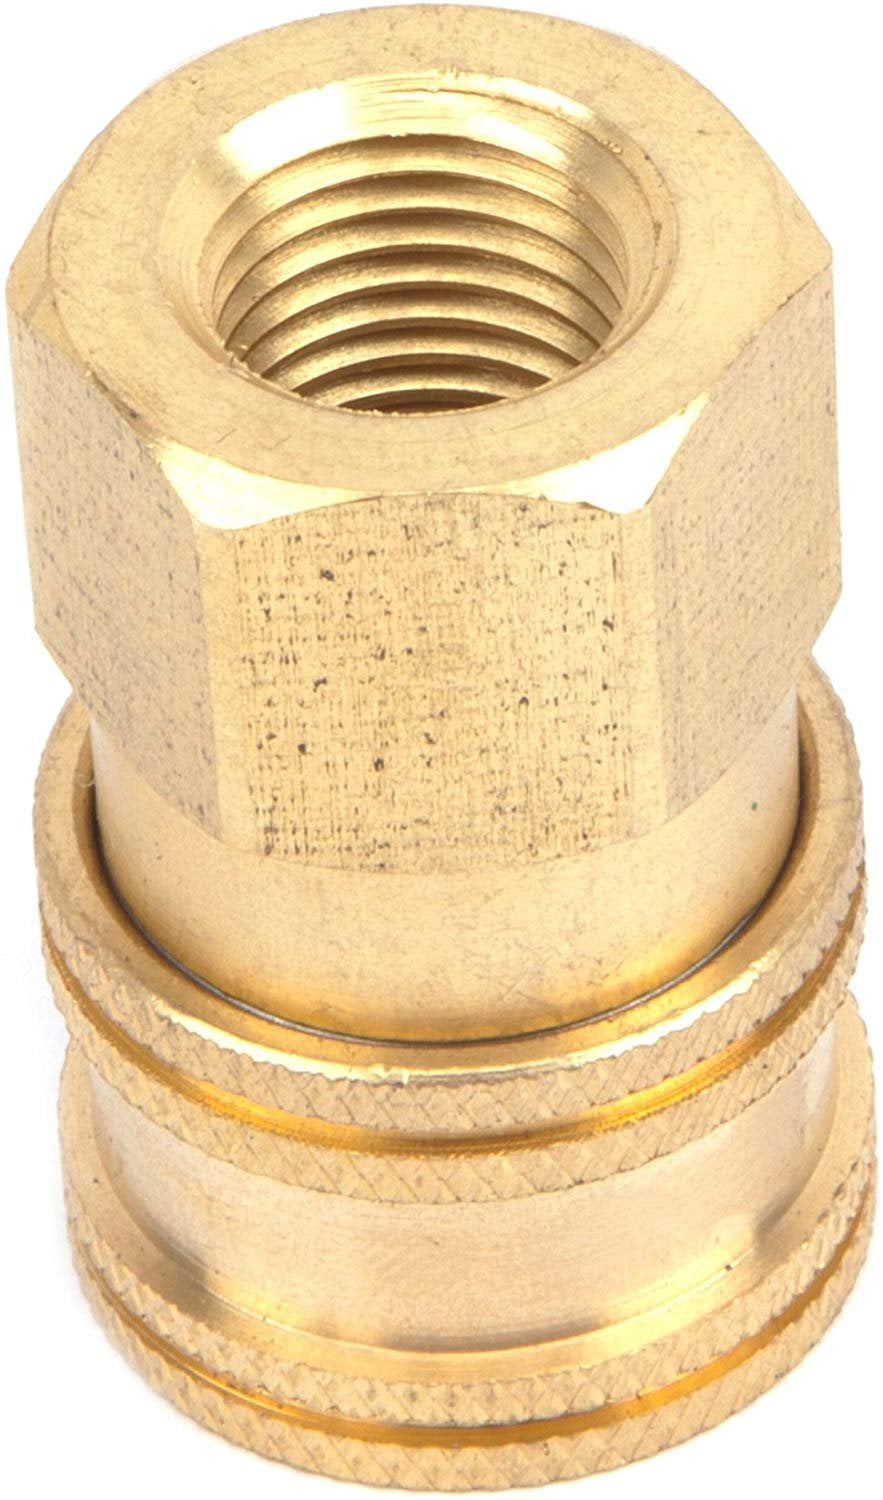 1/4" BSP Male Pressure Washer Mini 11.6mm Quick Release Plug Coupling 